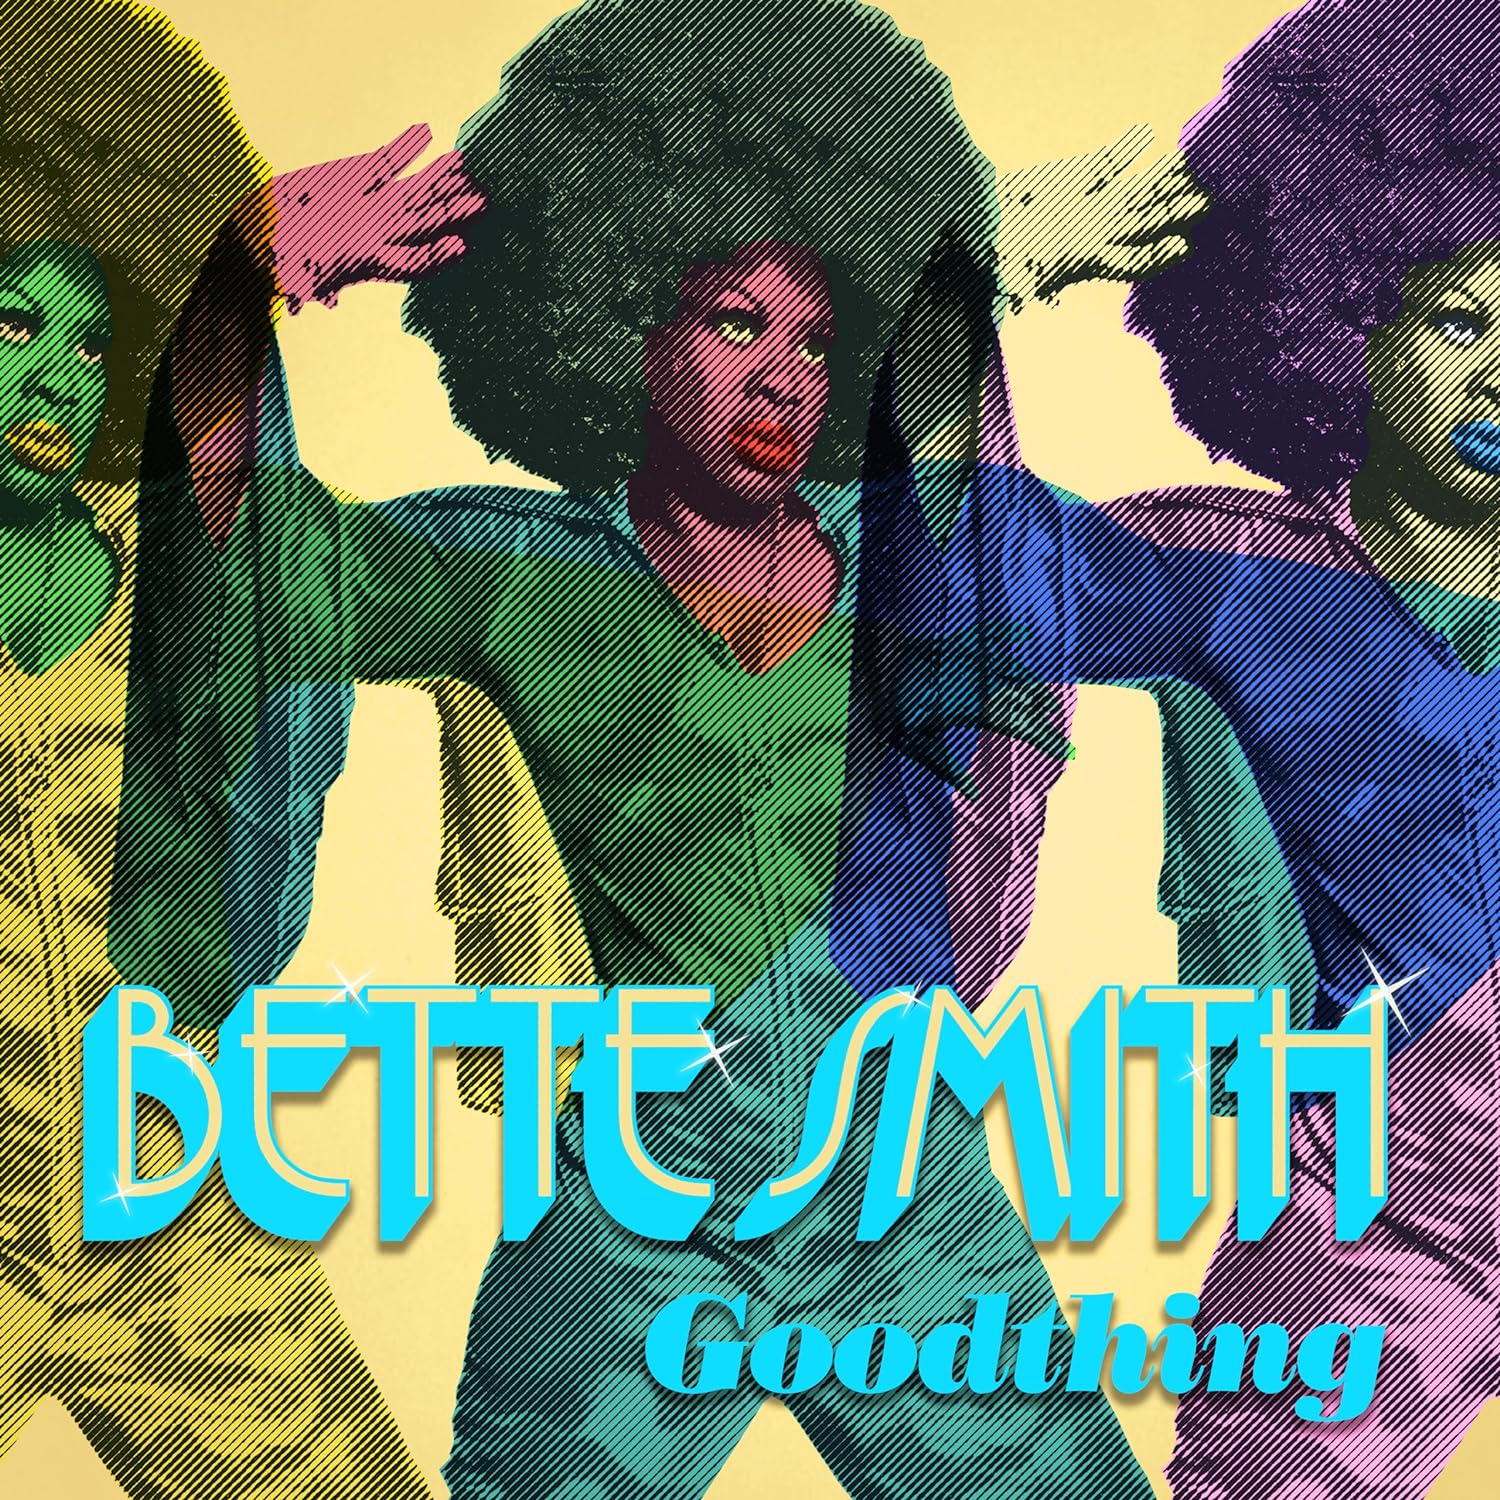 BETTE SMITH - Goodthing - LP - Black Vinyl [MAY 3]